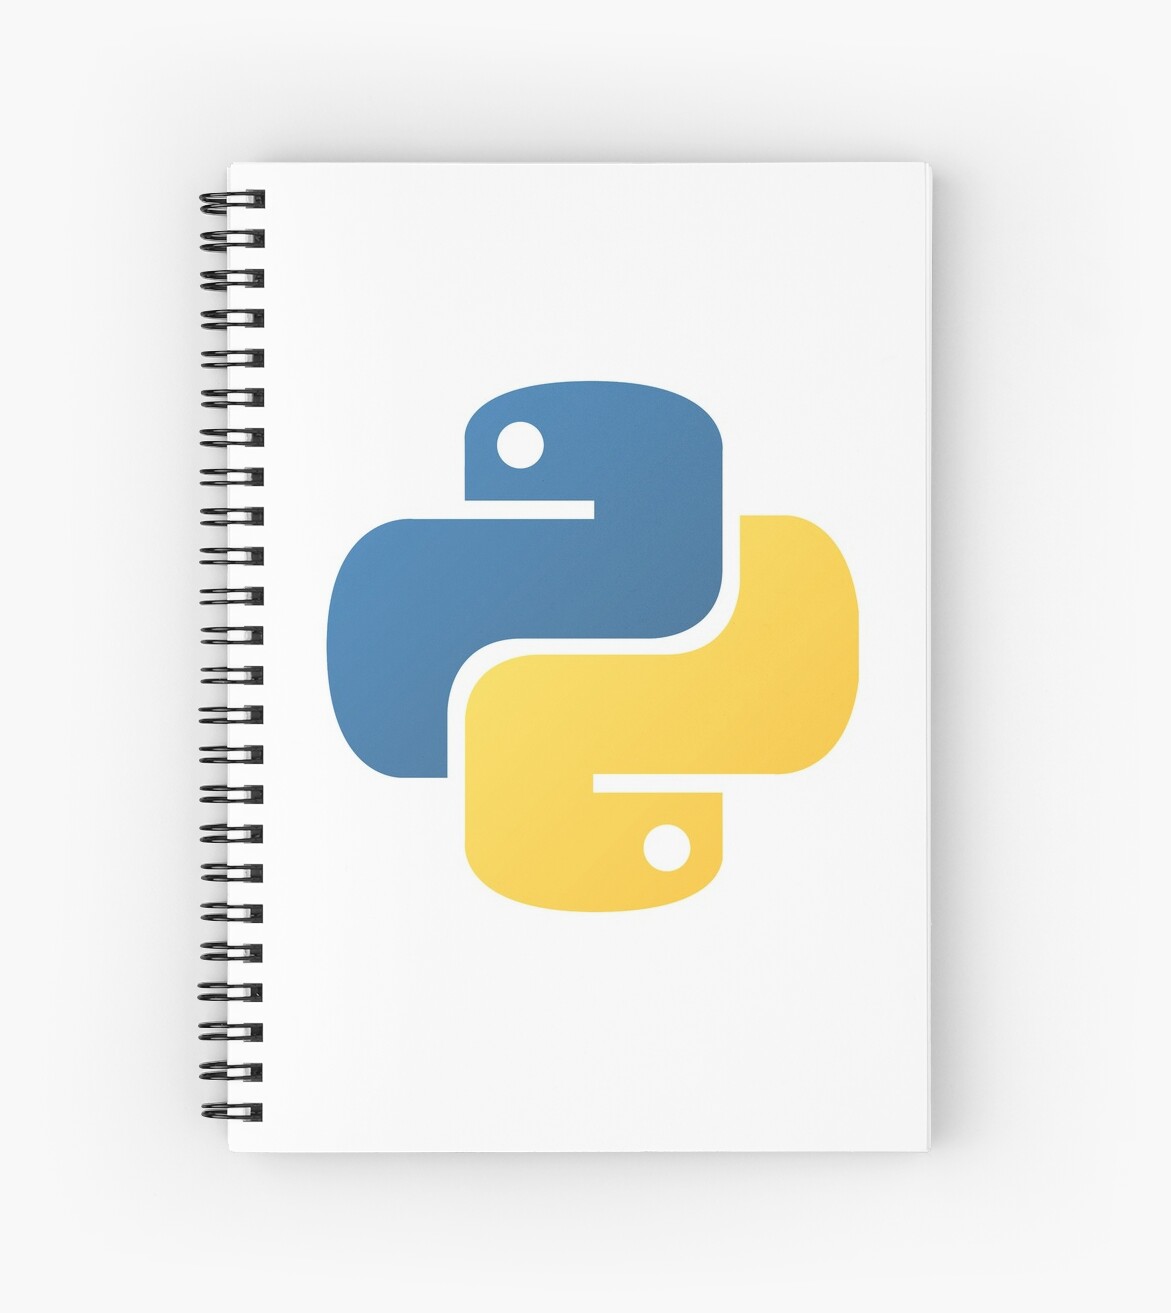 python notebook